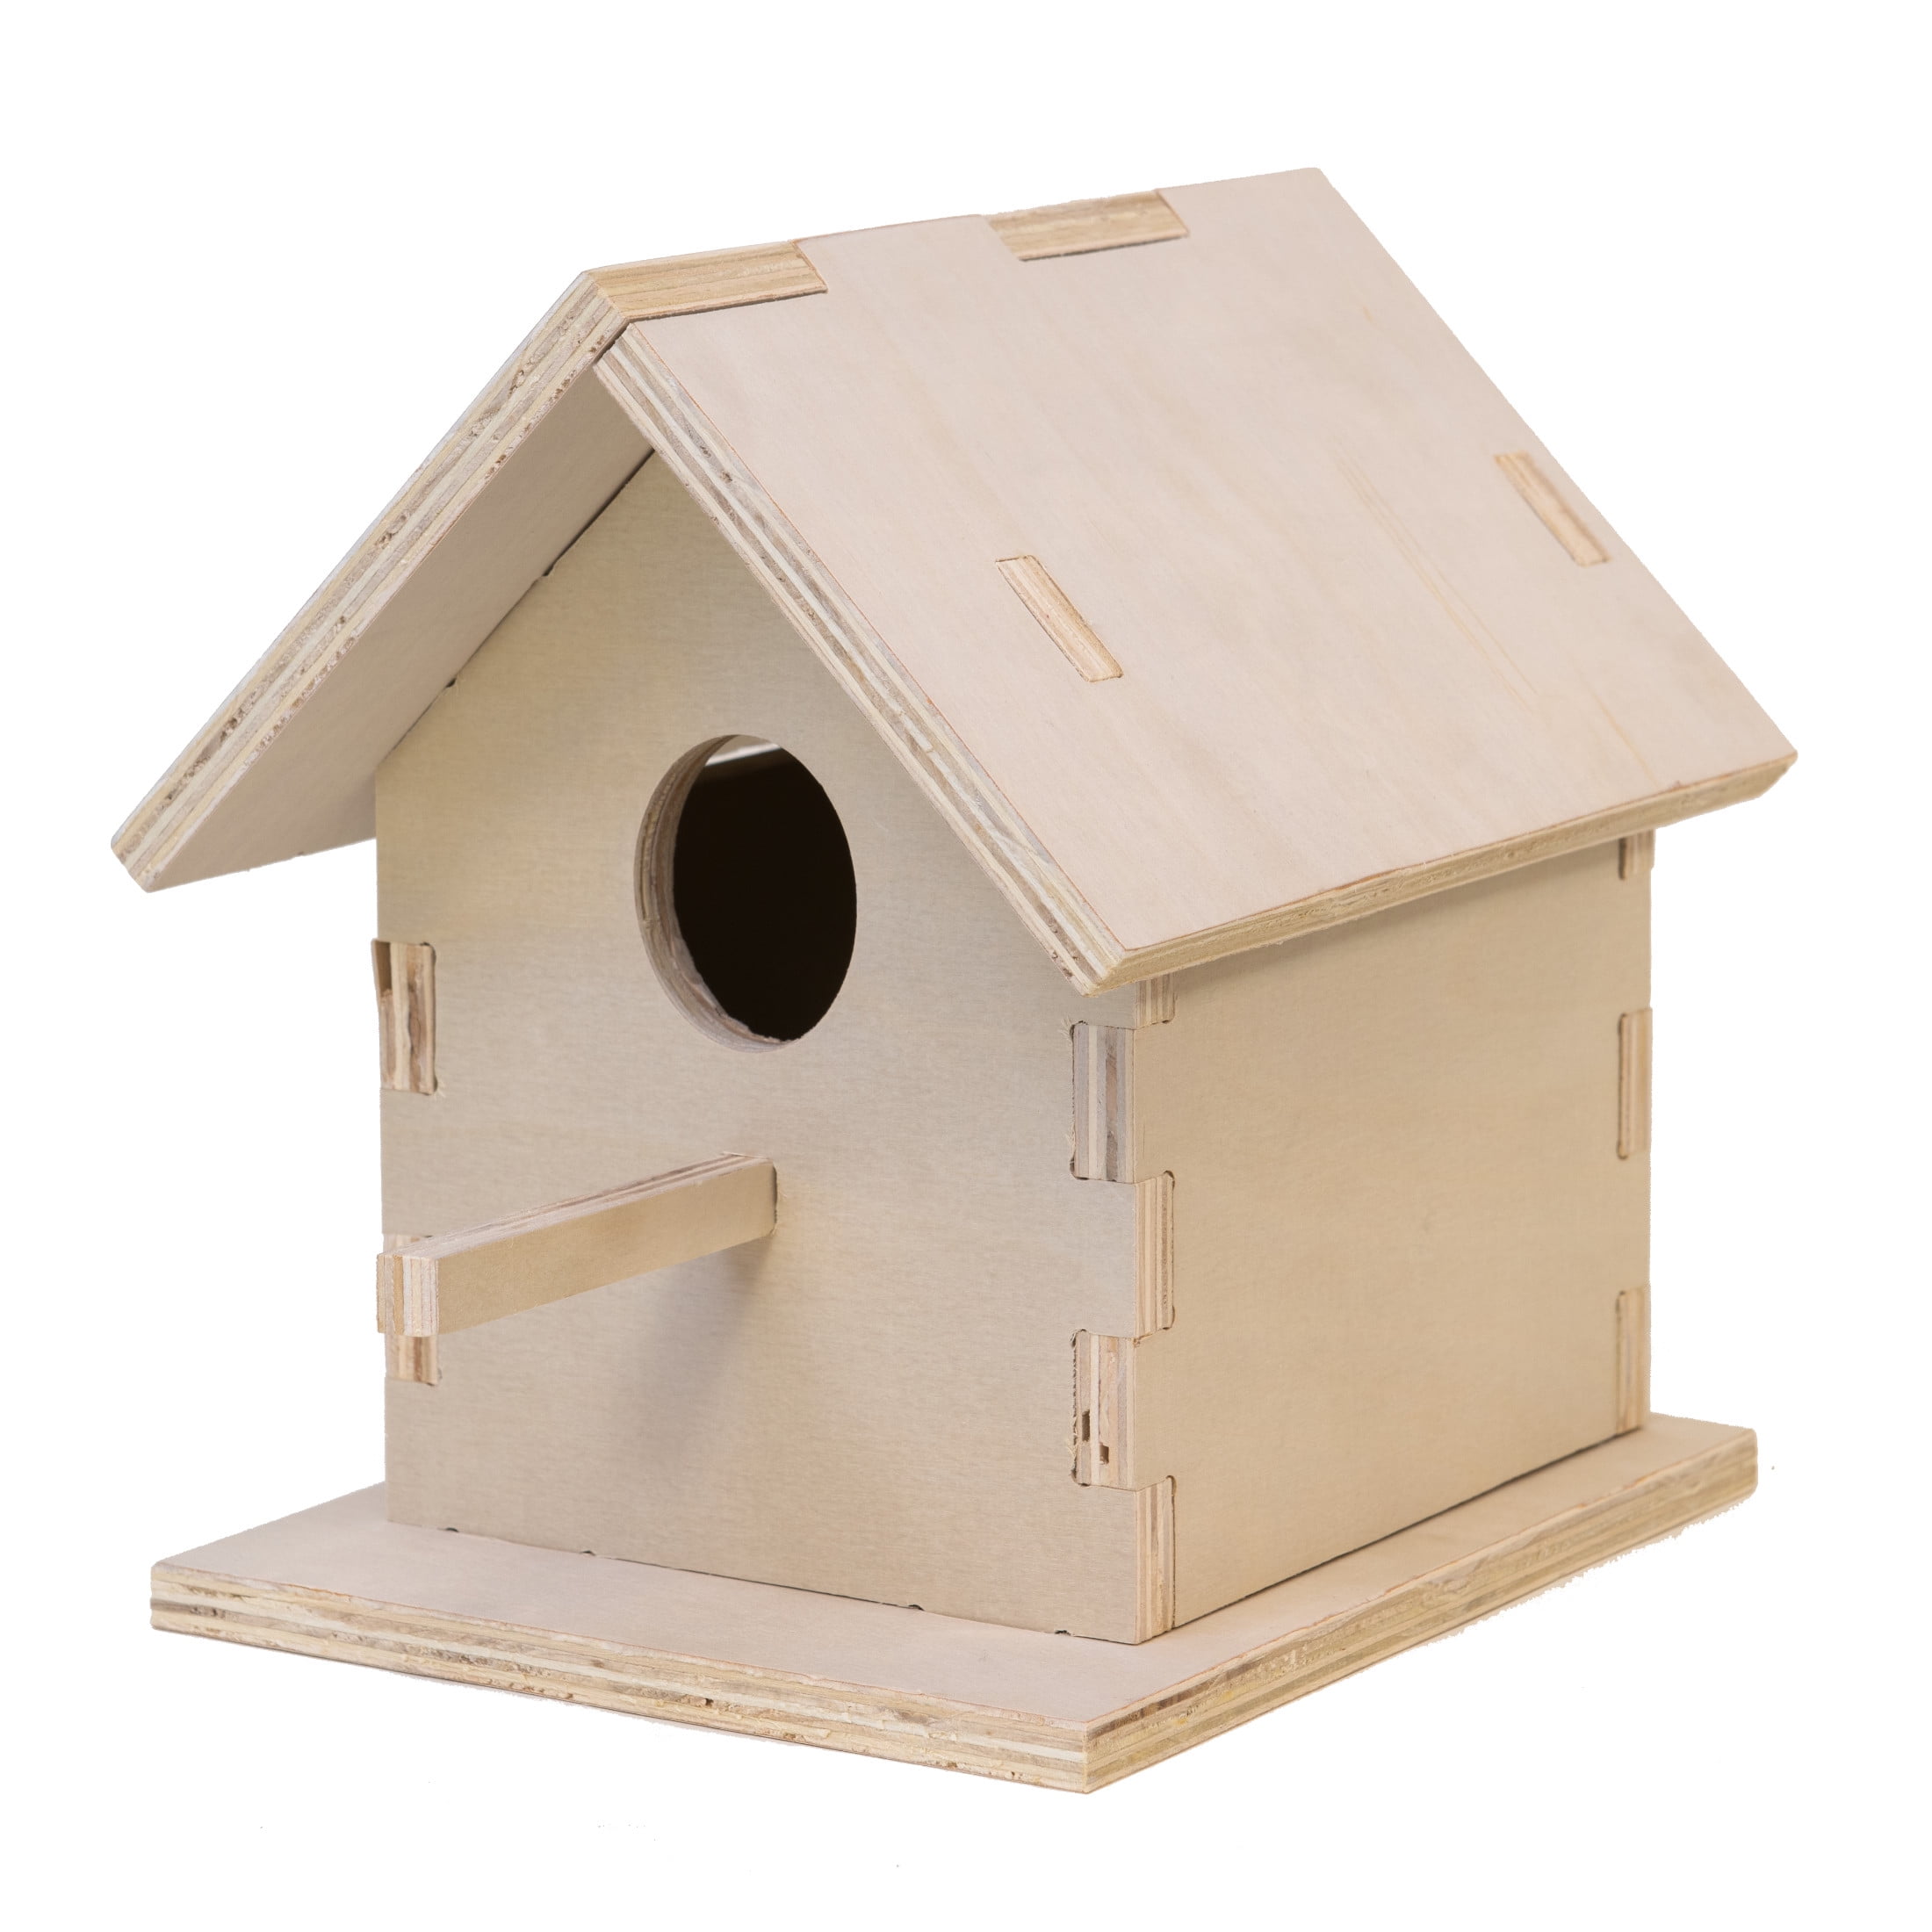 Lot of 2 Woodshop DIY Model Build Play Kit Bird House Bird Feeder 